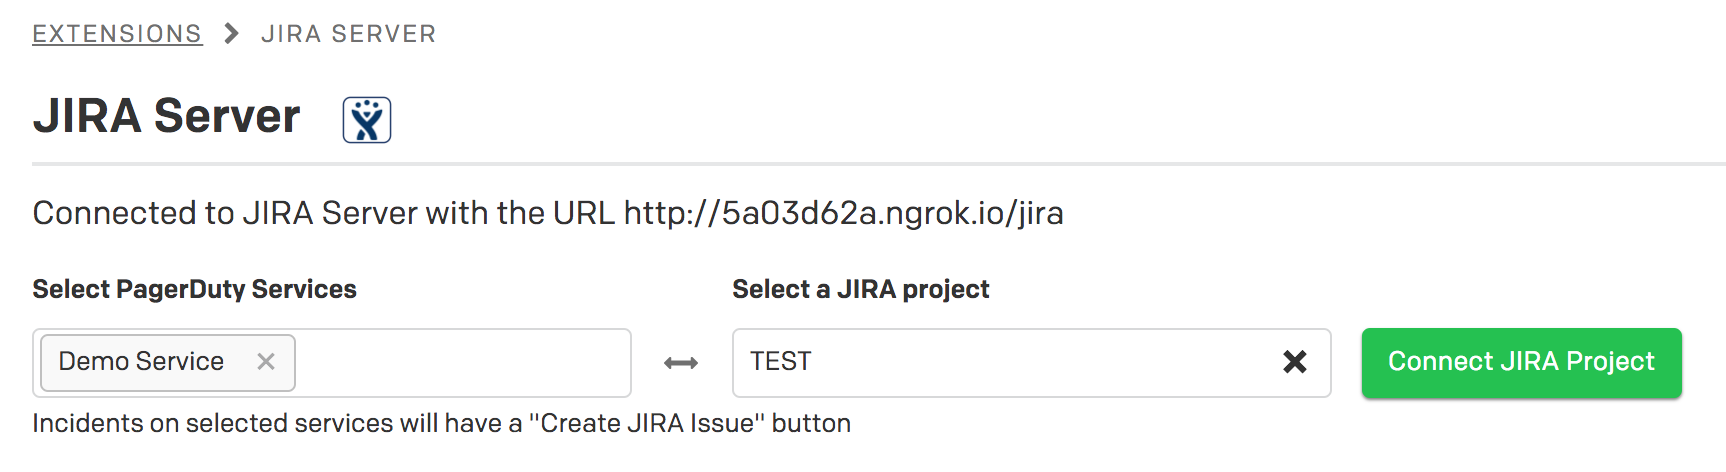 Enter Jira Server URL